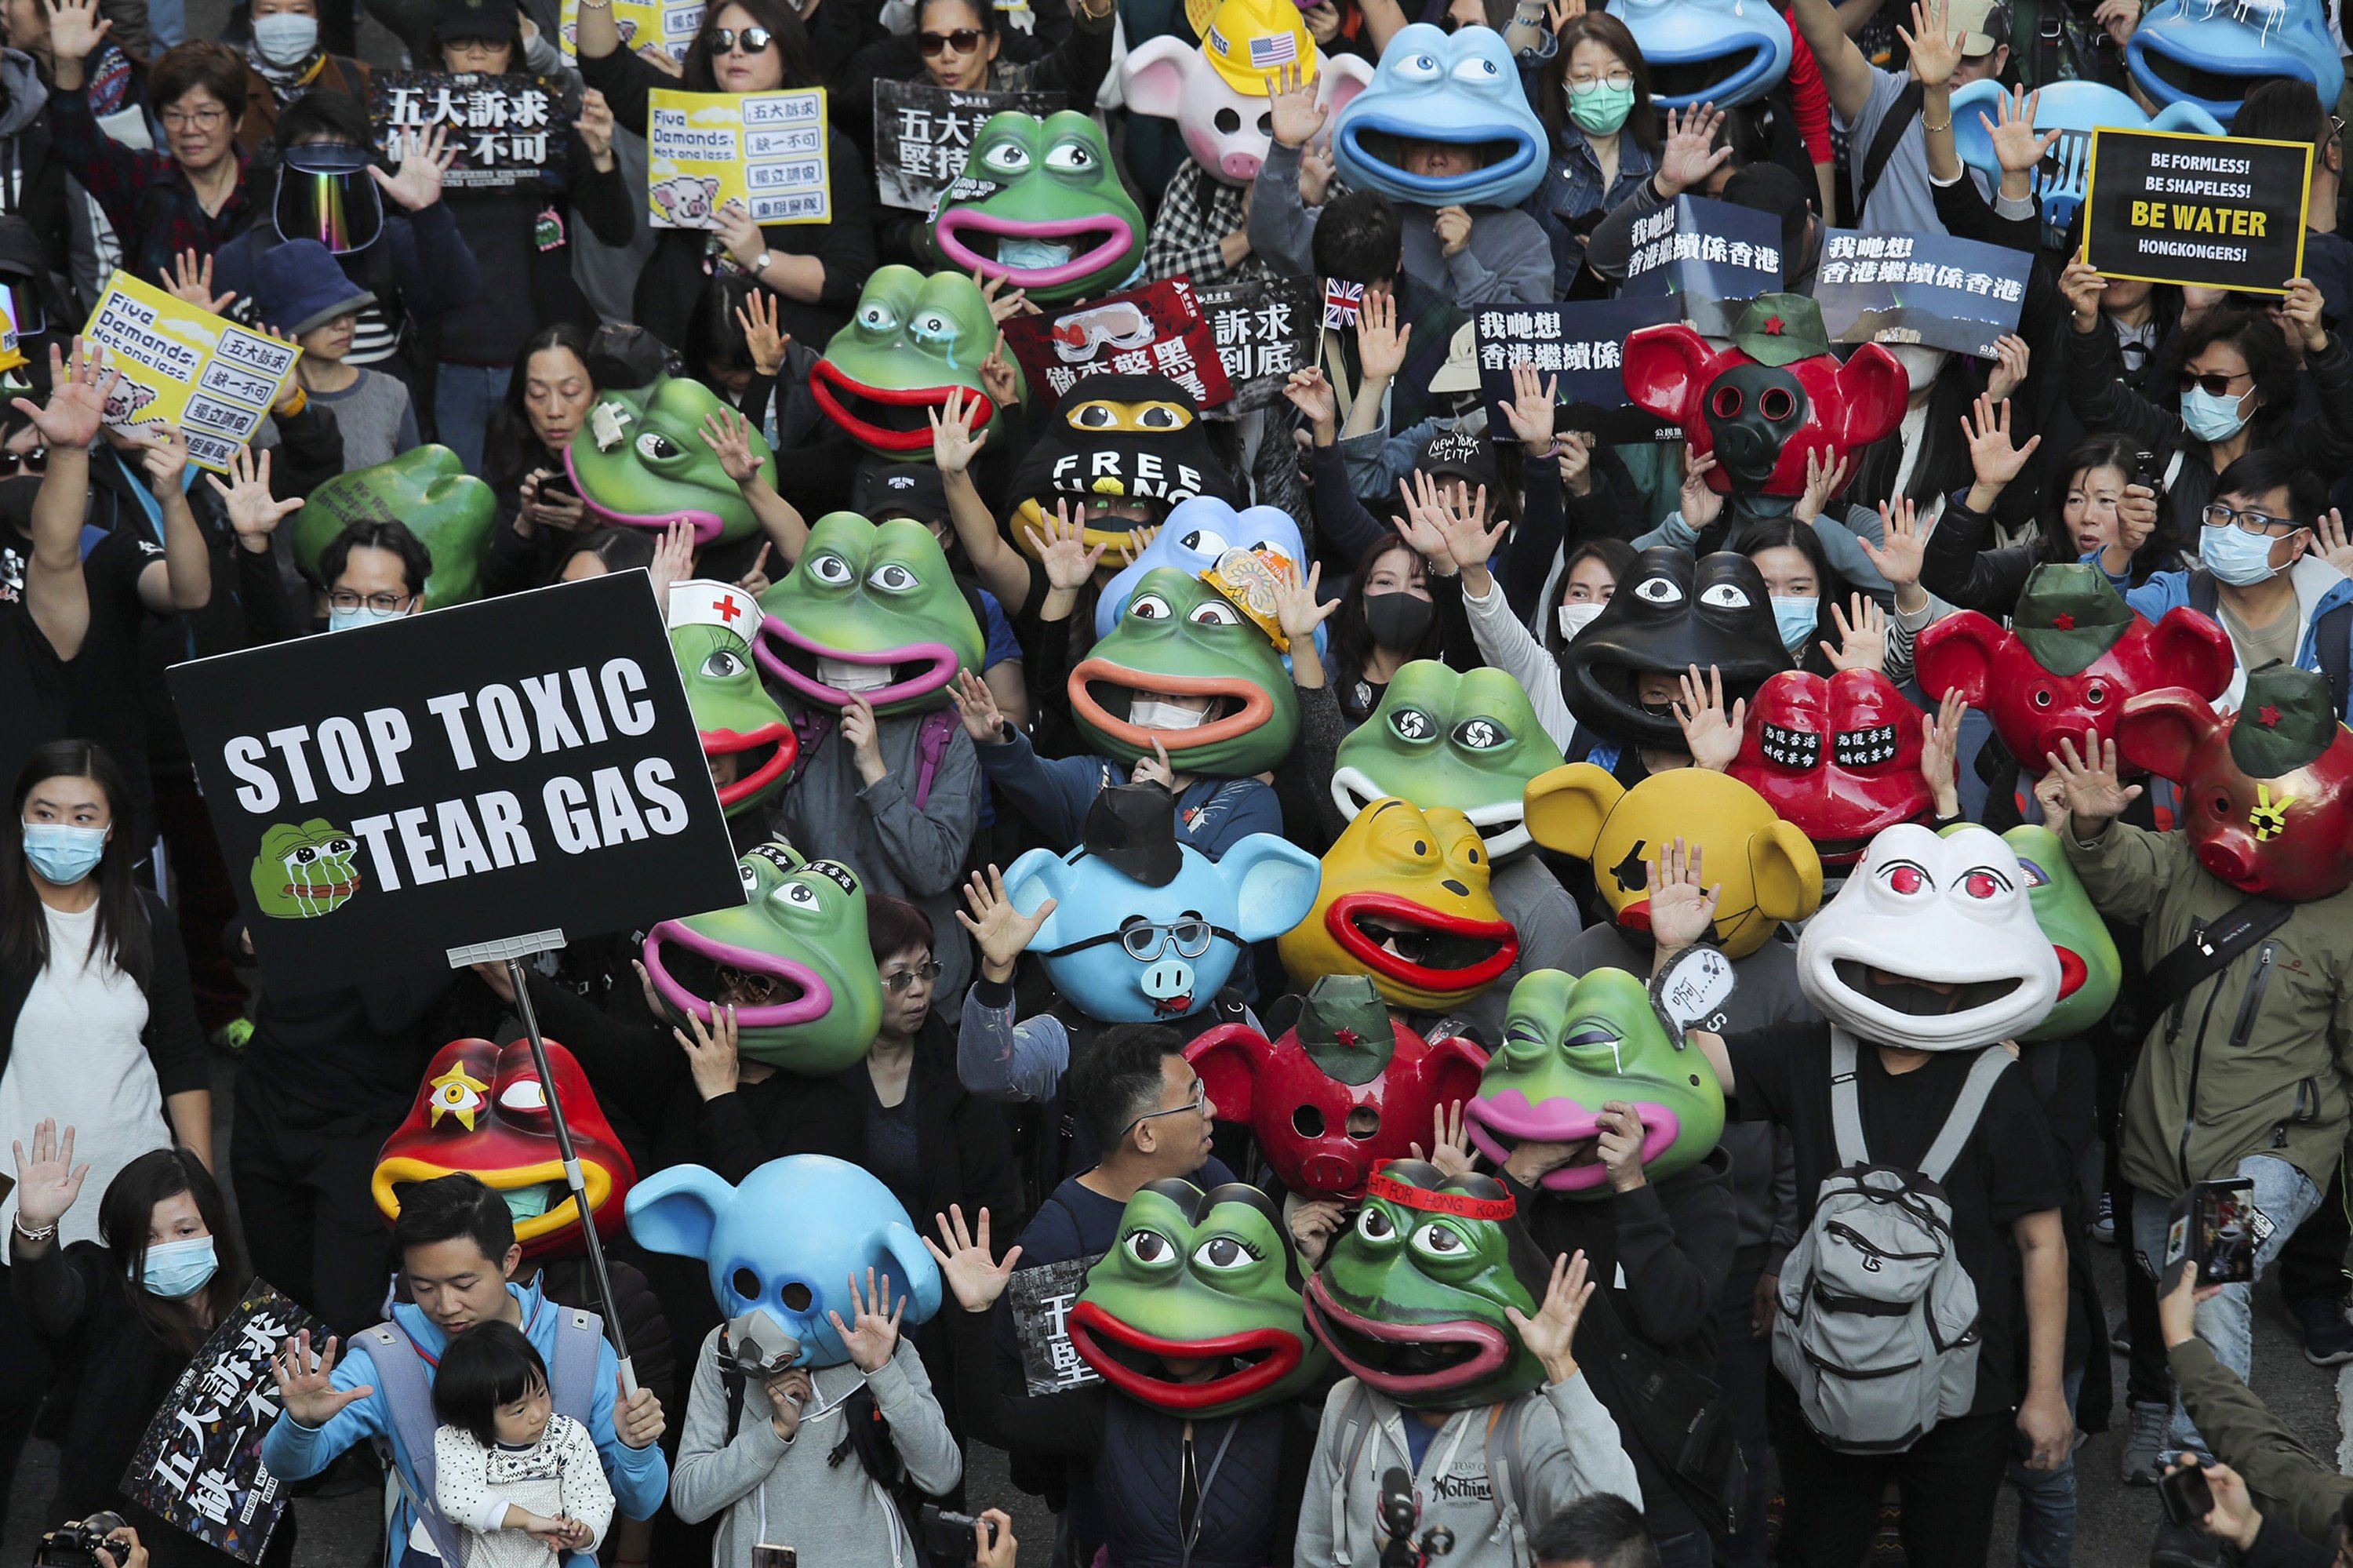 Anti-establishment views unite, divide Hong Kong protesters